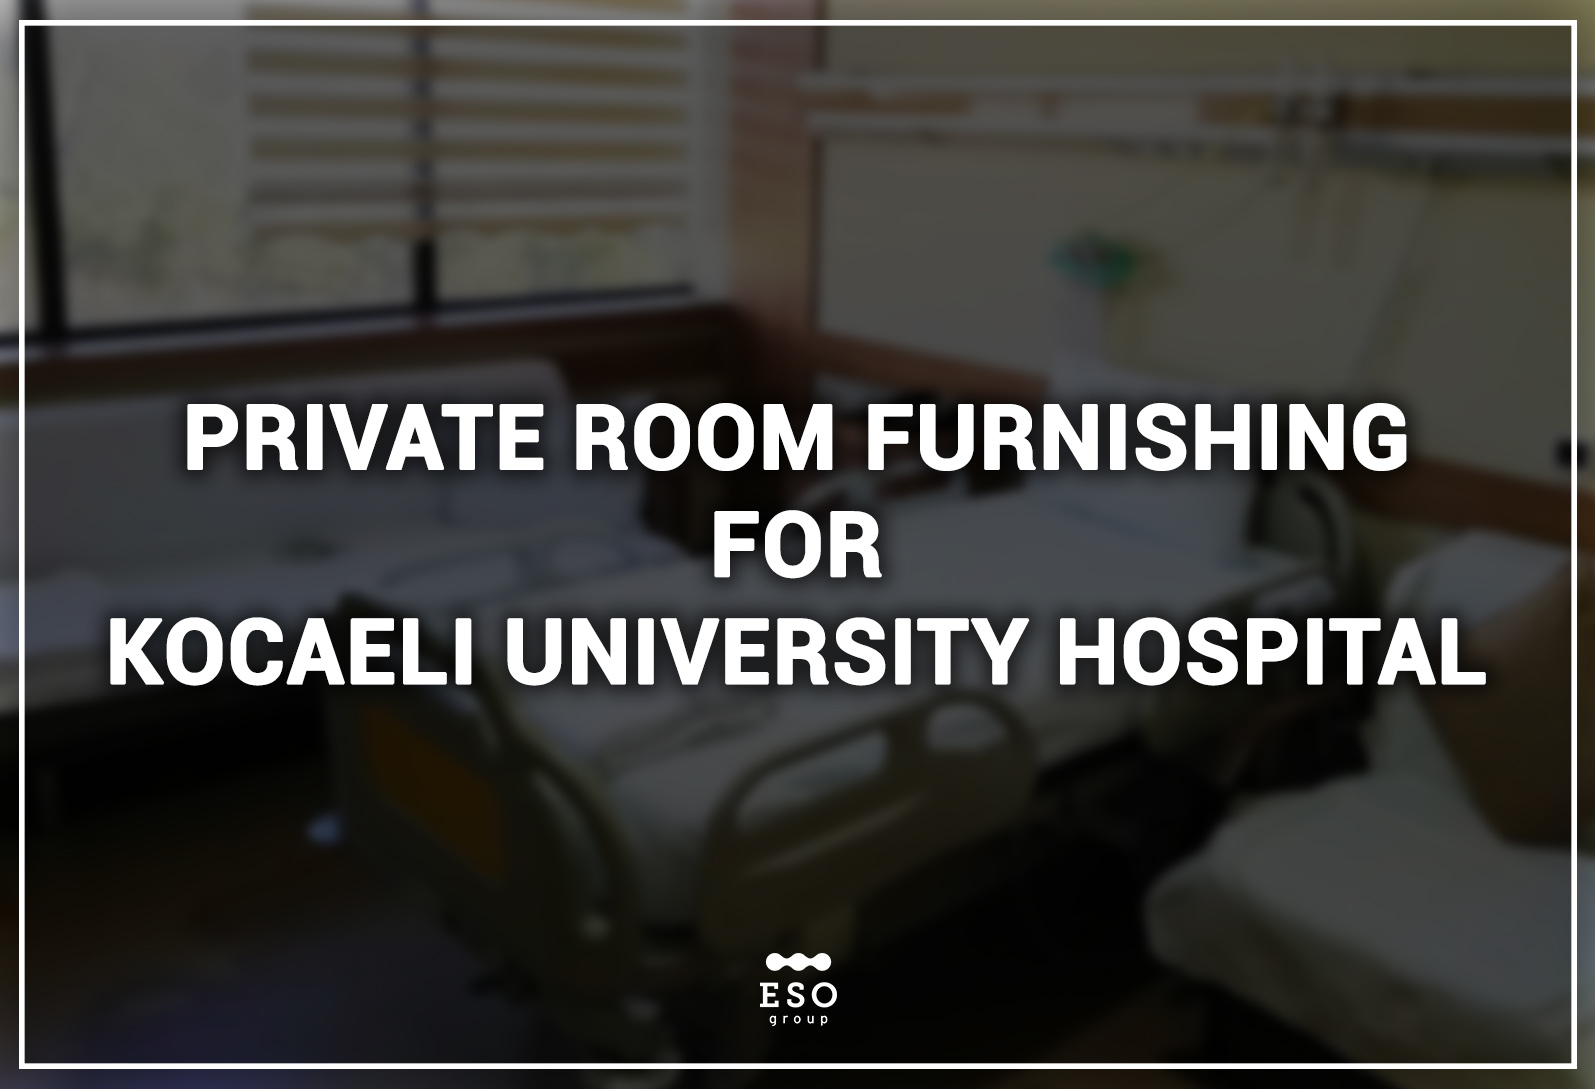 Private Room Furnishing for Kocaeli University Hospital